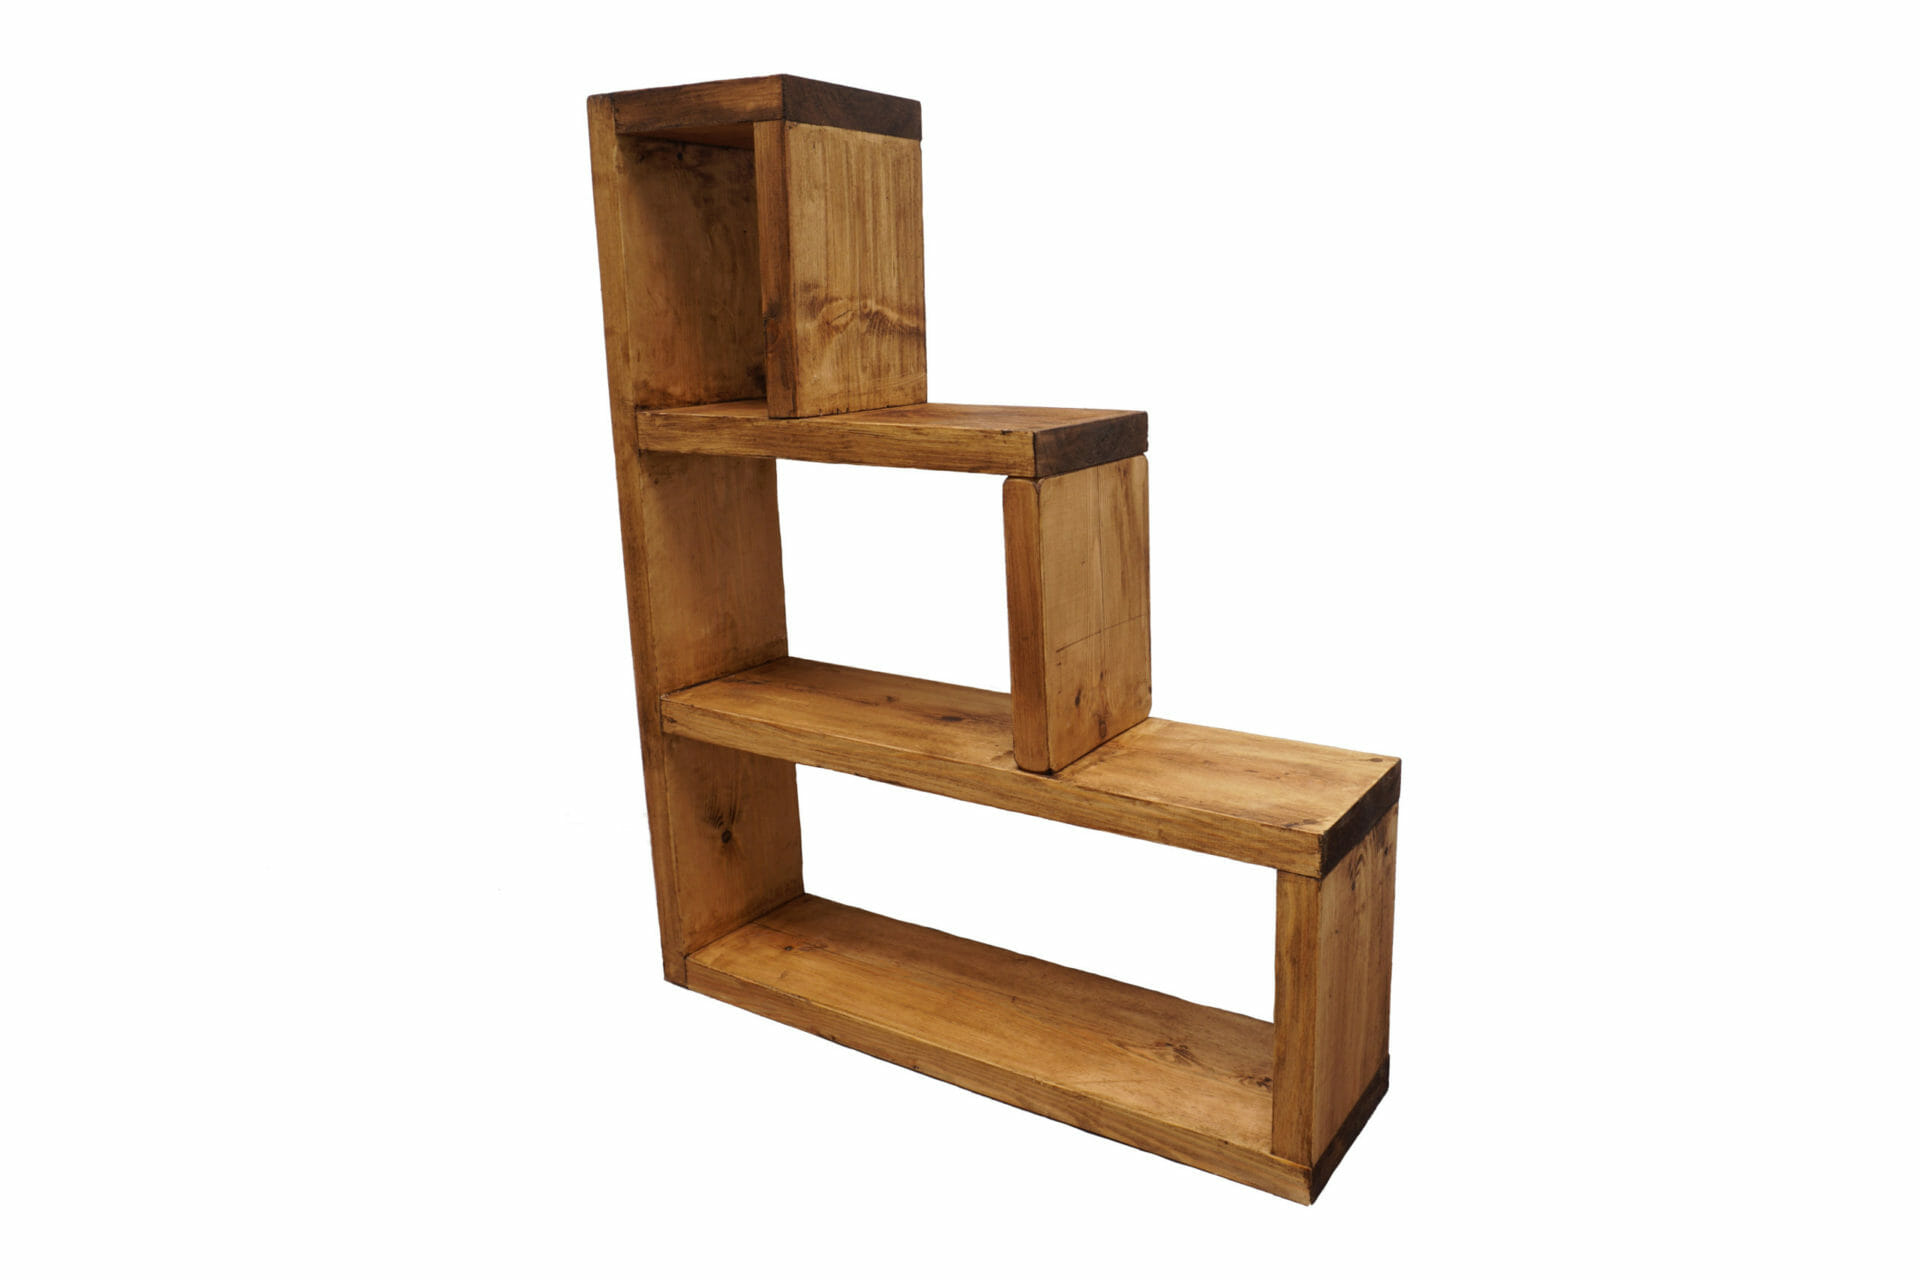 Solid reclaimed wood shelving unit 3 shelves